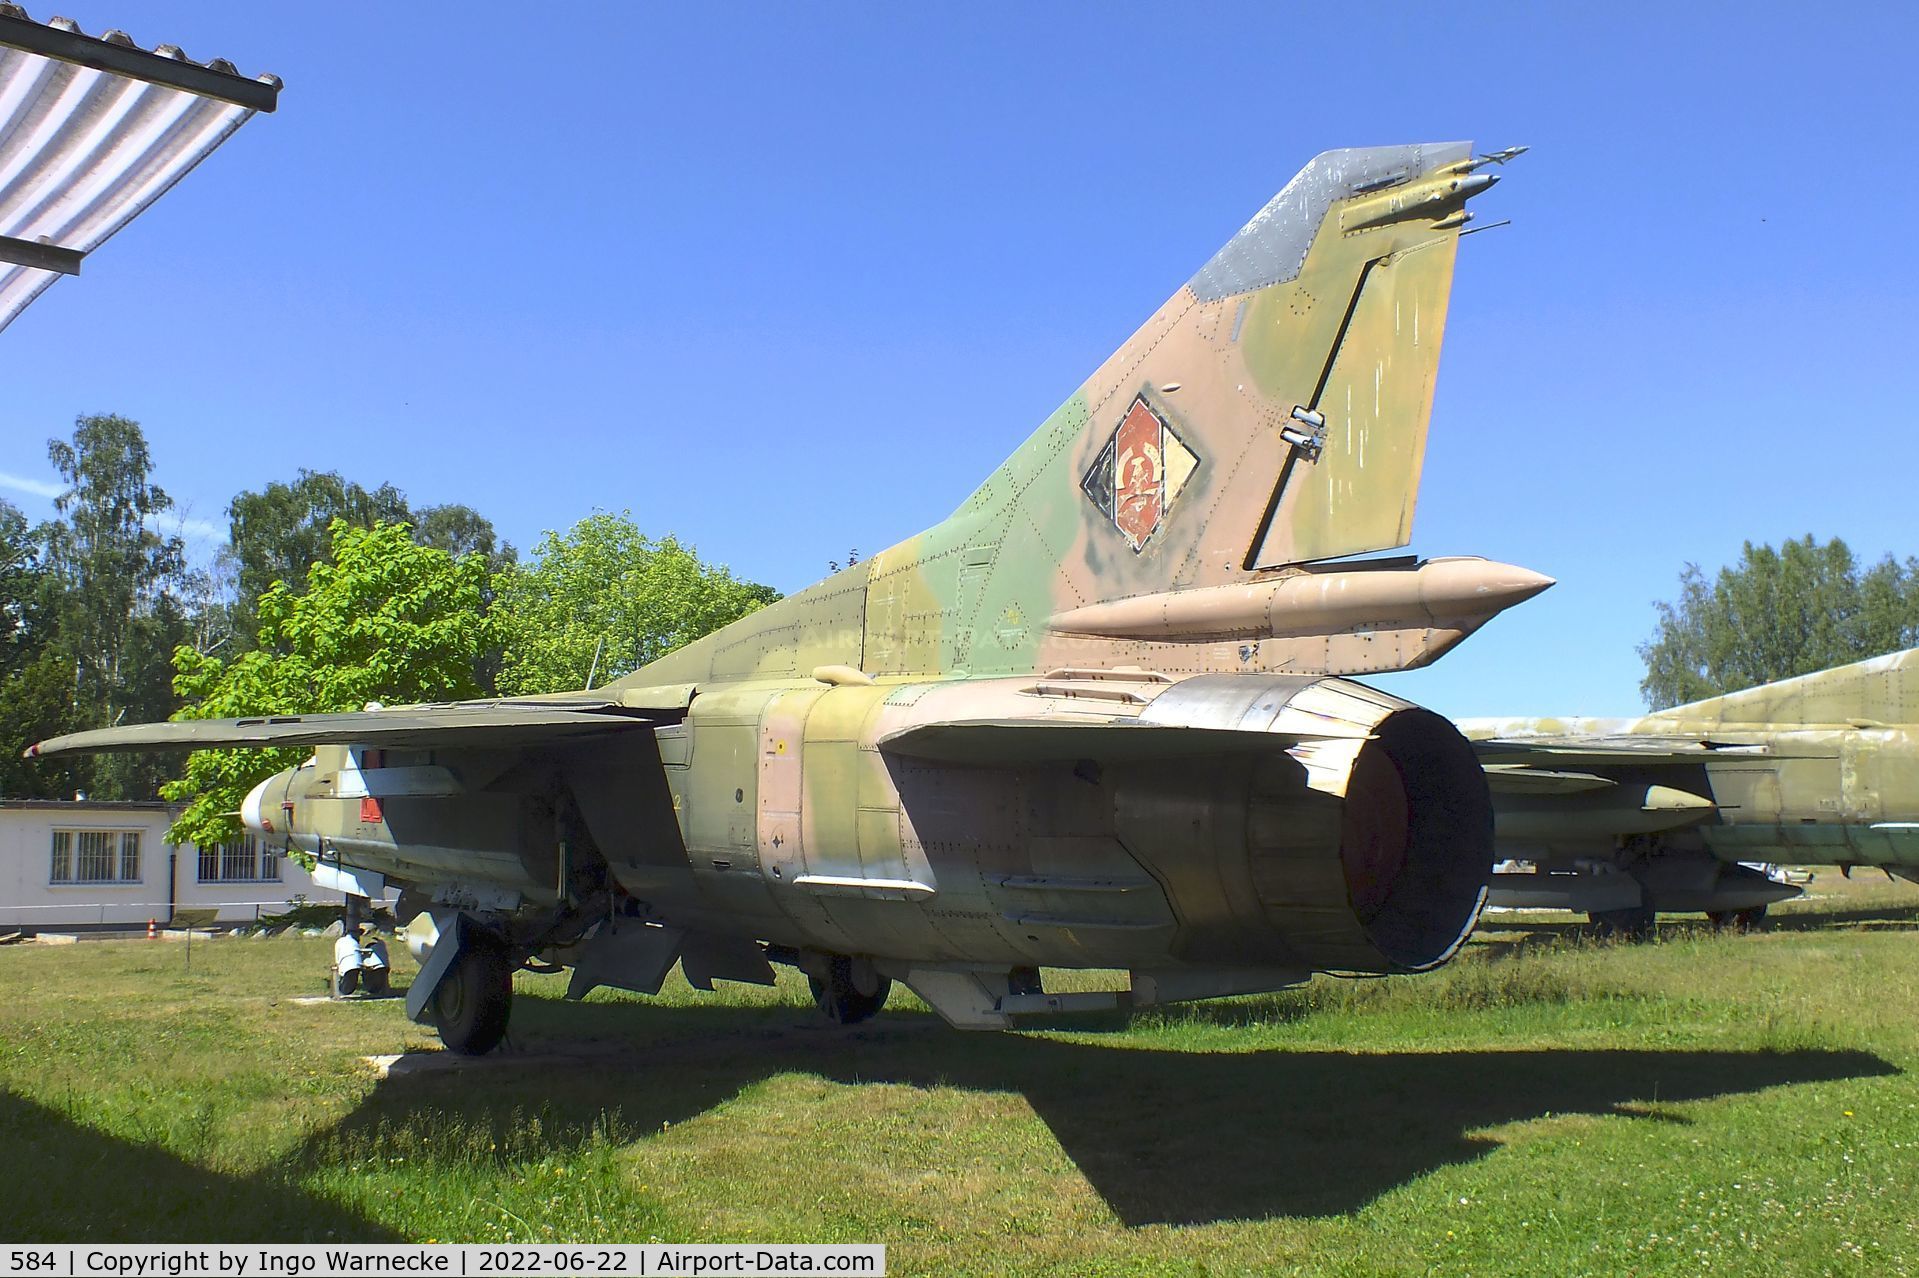 584, 1978 Mikoyan-Gurevich MiG-23MF C/N 03902 13098, Mikoyan i Gurevich MiG-23MF FLOGGER-B at the Flugplatzmuseum Cottbus (Cottbus airfield museum)